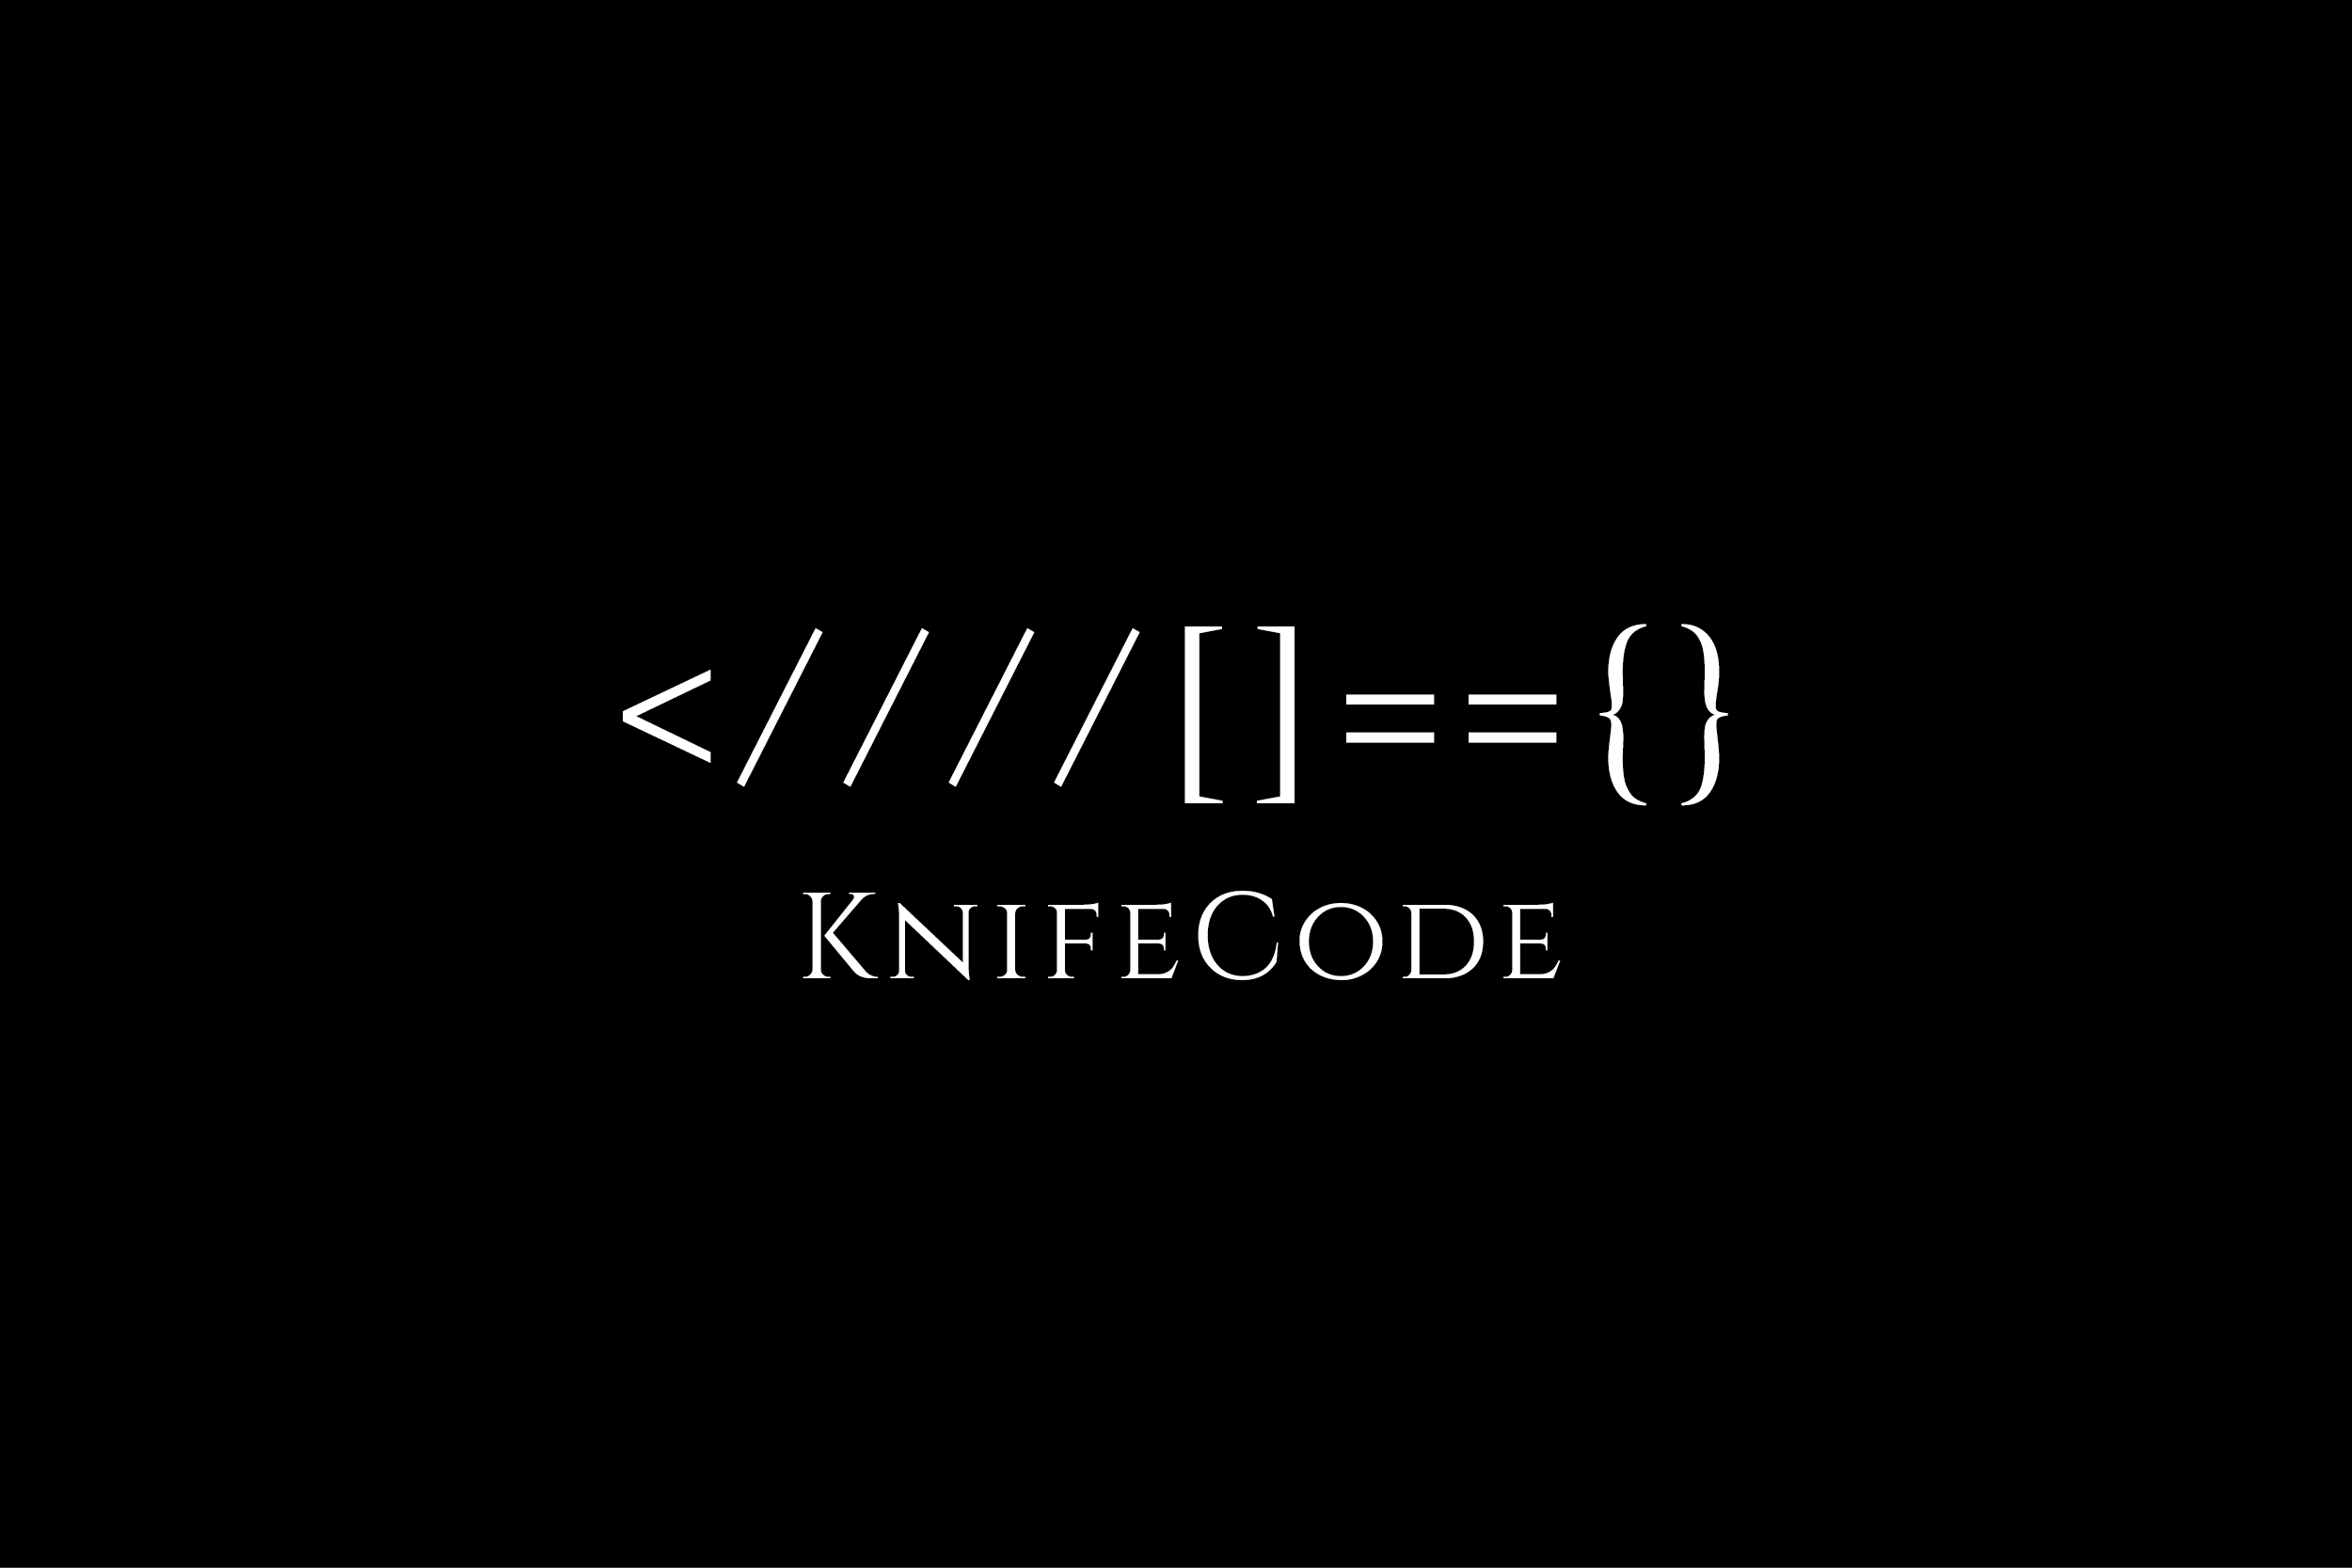 Knifecode